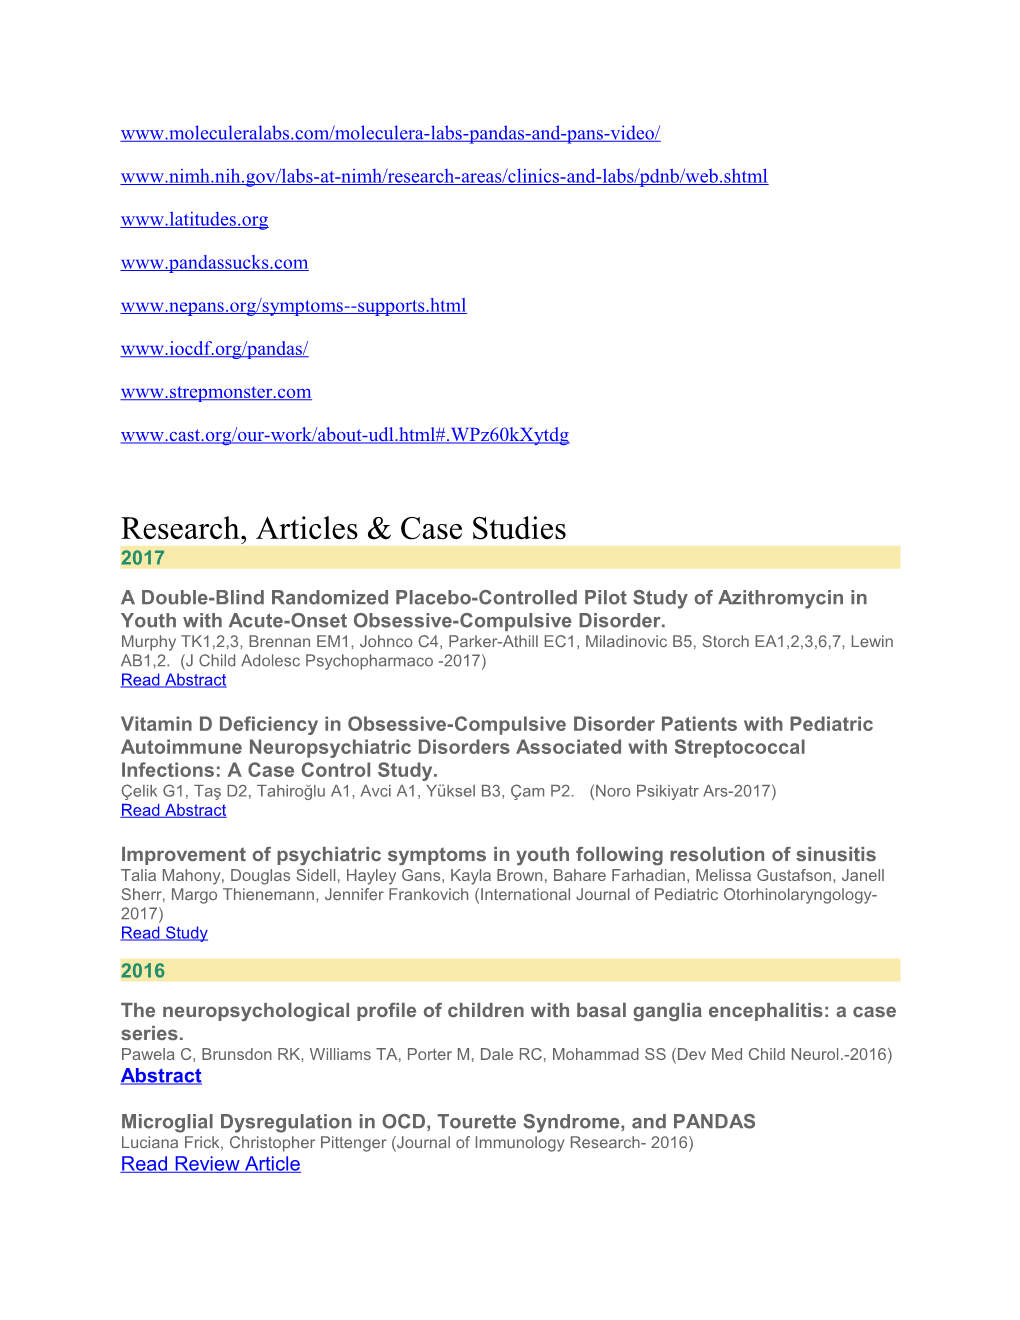 Research, Articles & Case Studies